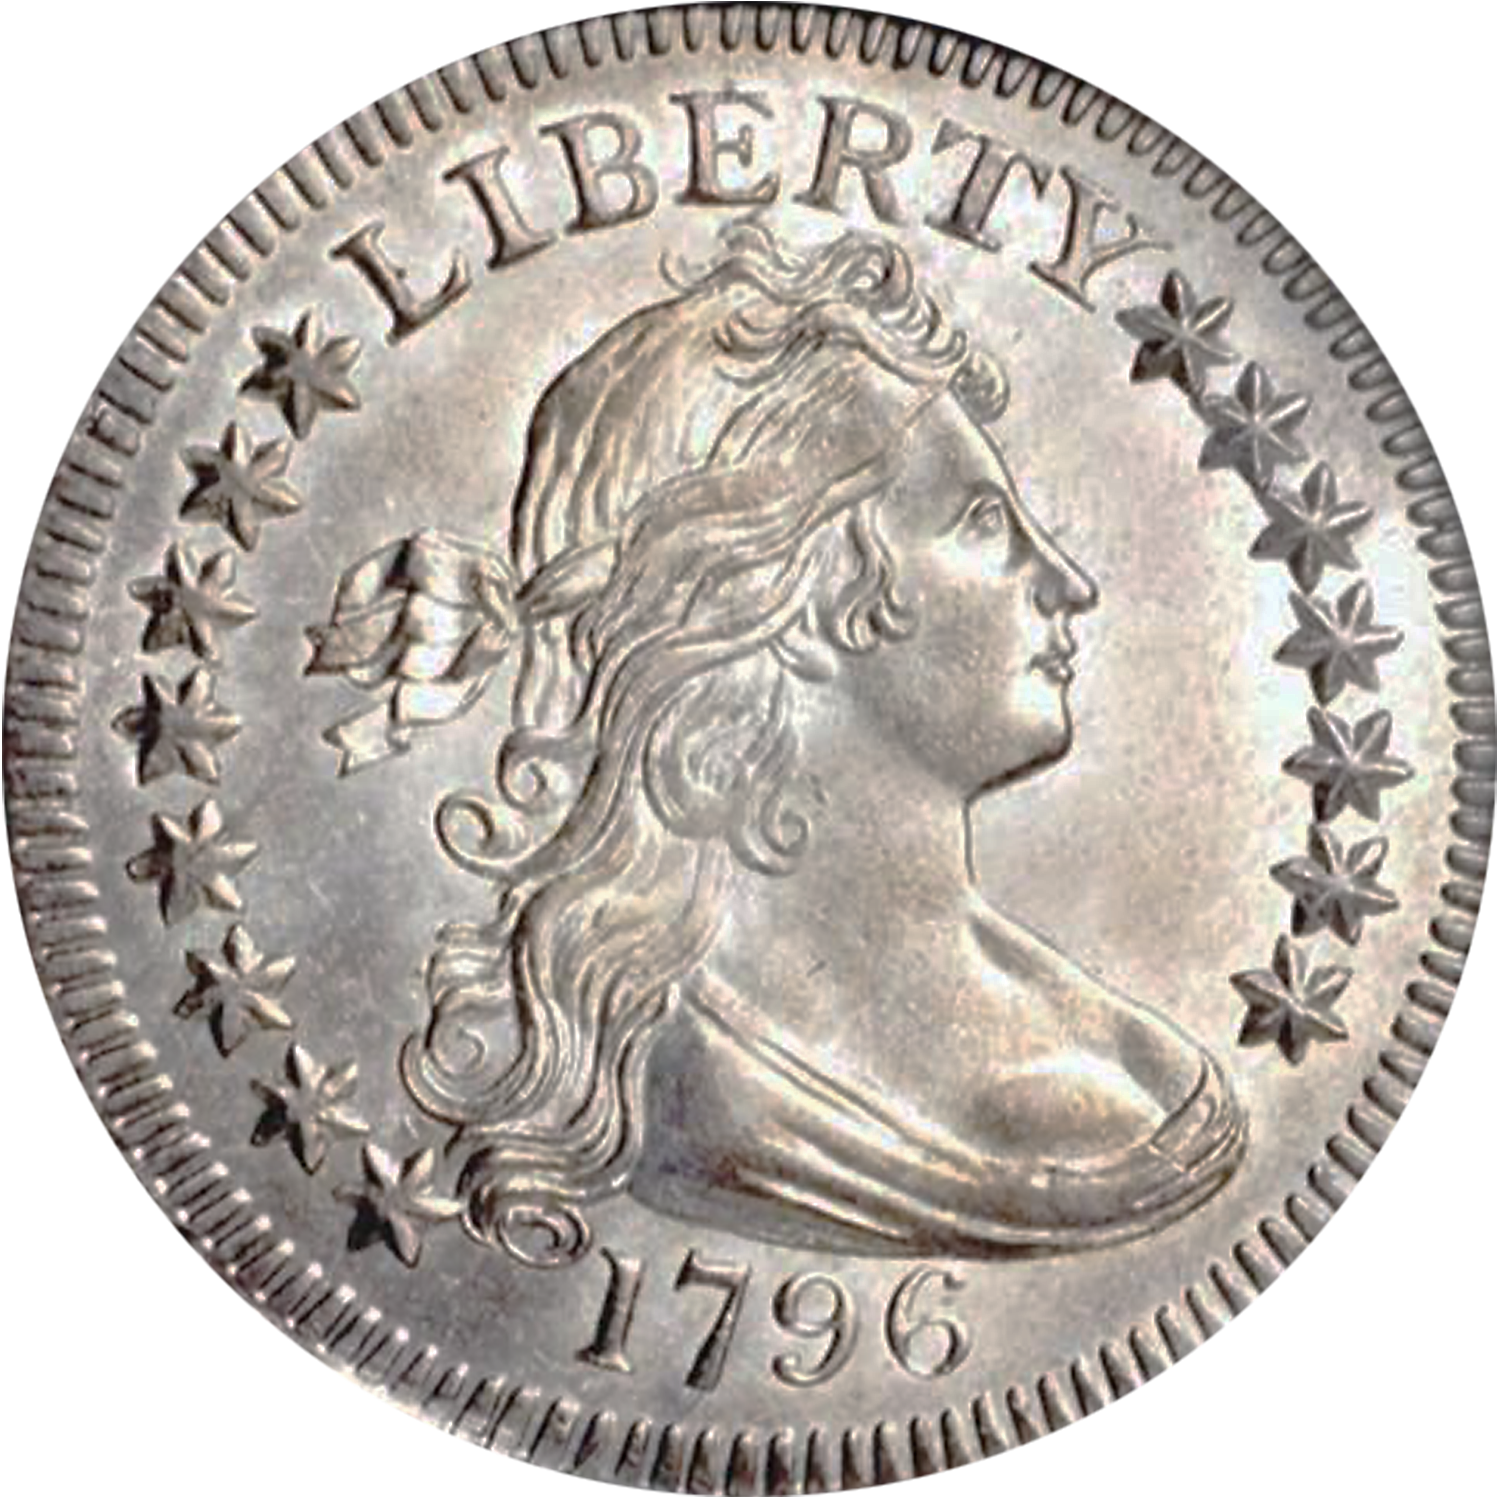 1796 draped bust small eagle quarter